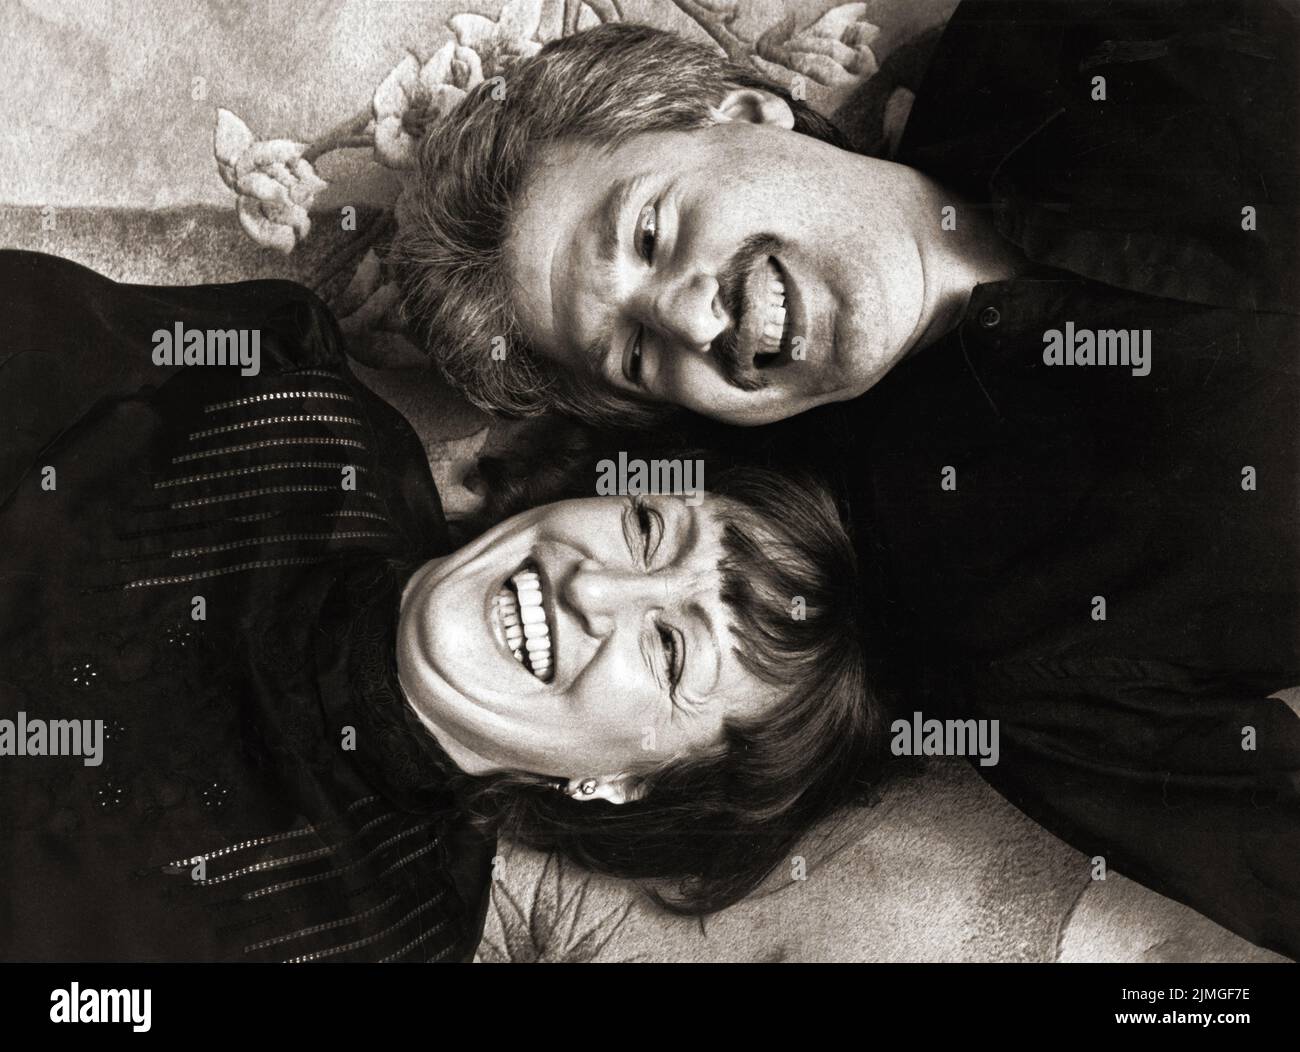 Posed photo of frequent collaborators, jazz vocalist Sheila Jordan and bassist Harvie S., AKA Harvie Swartz. In Manhattan, circa 1985. Stock Photo